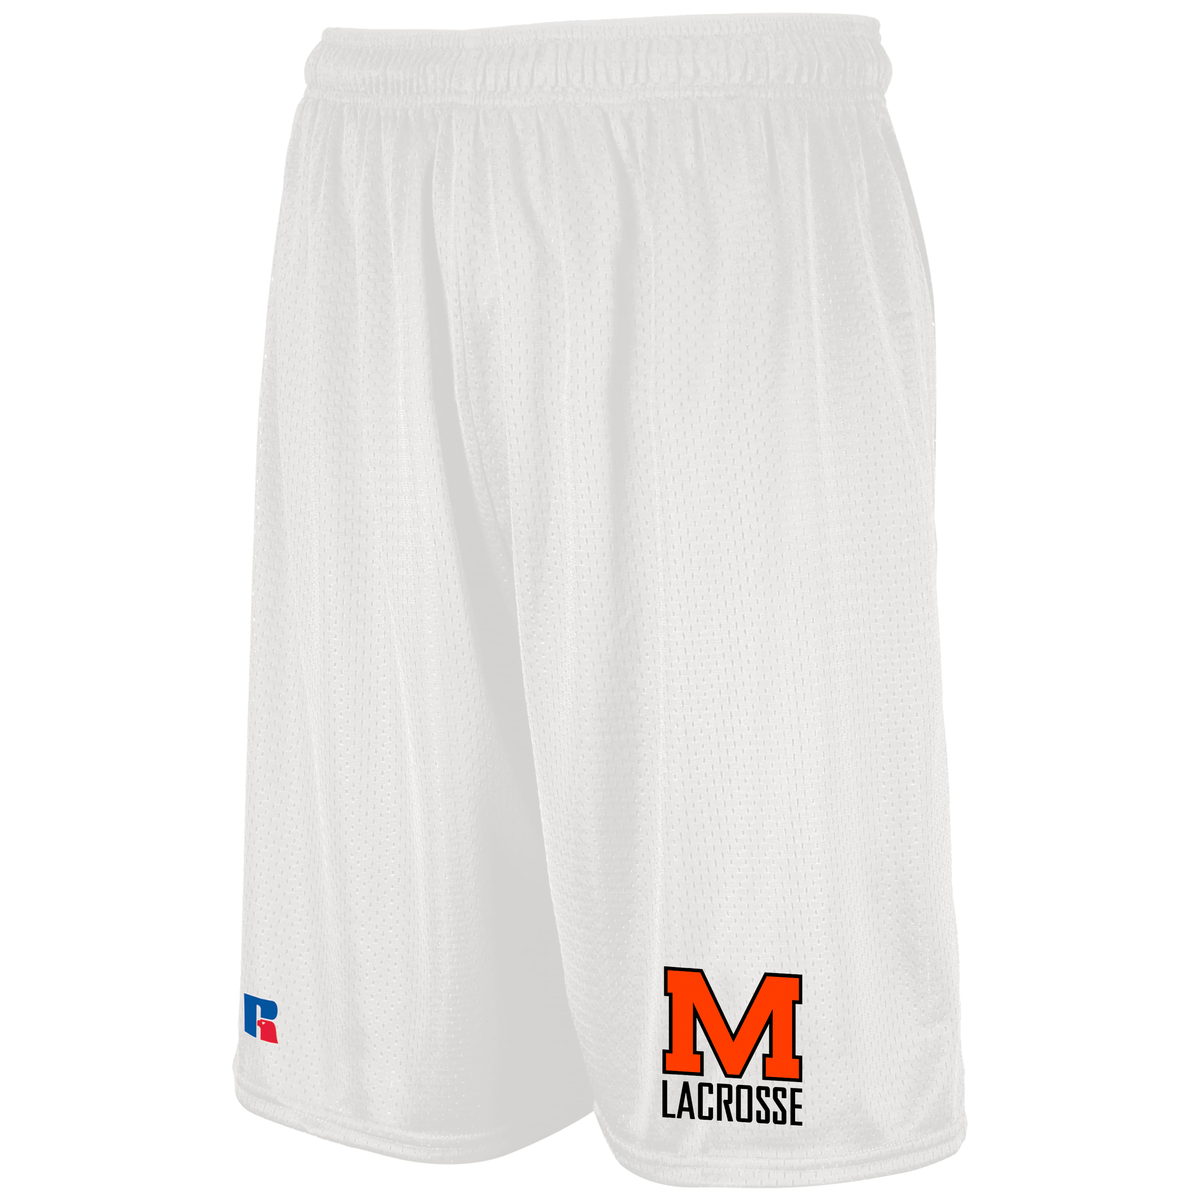 Middletown Lacrosse Dri-Power Mesh Shorts